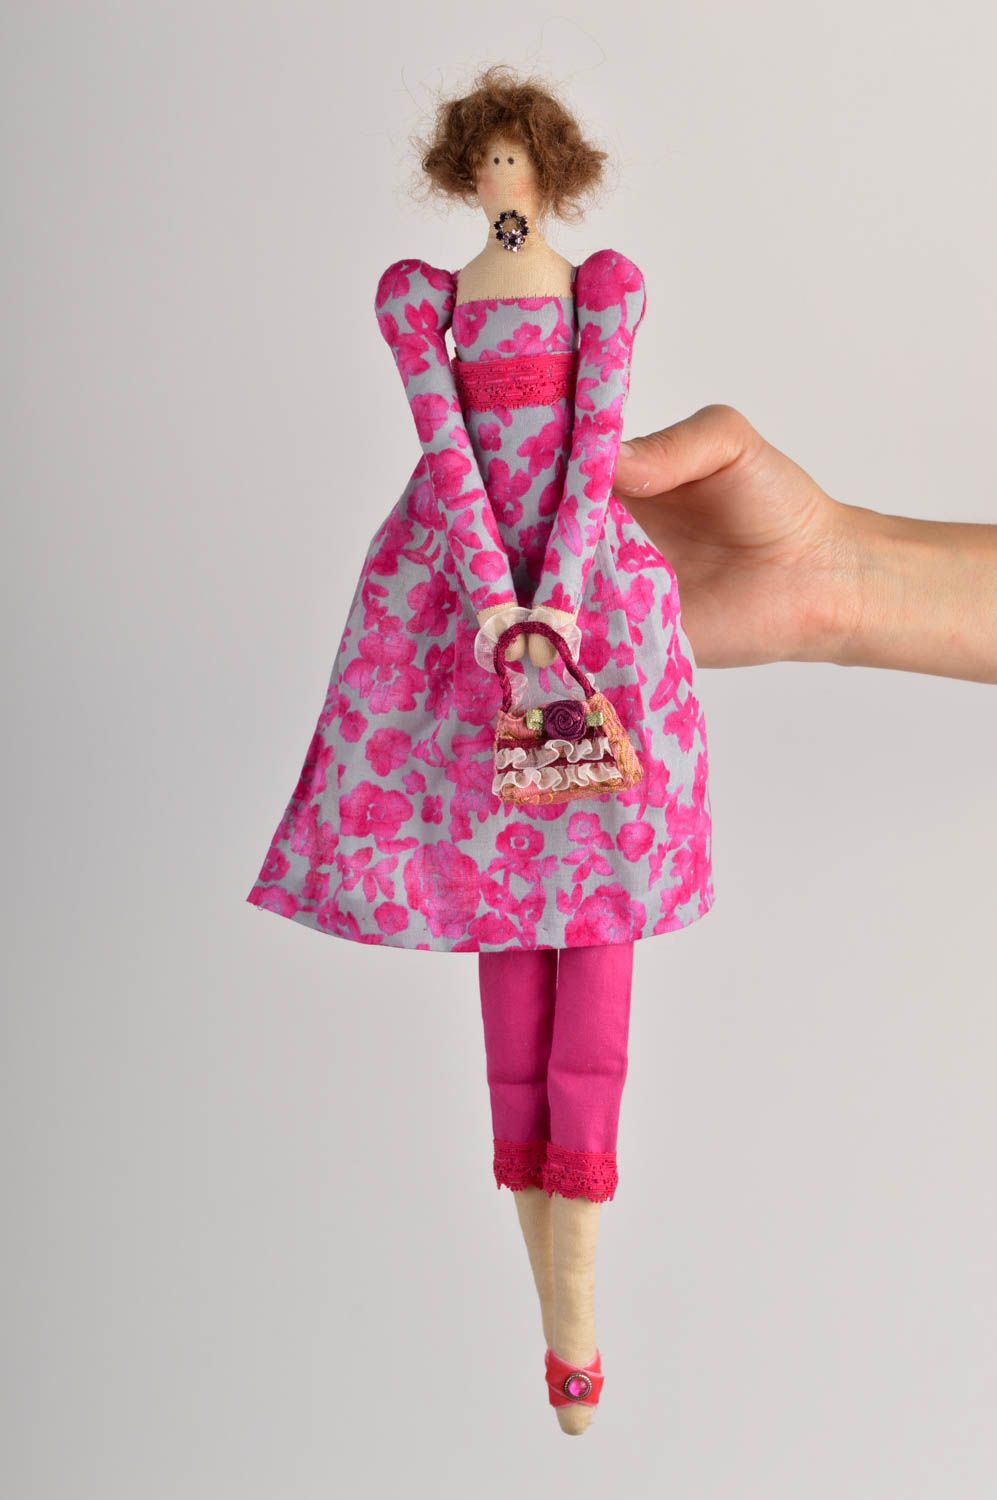 Handmade doll in pink dress stuffed toy designer childrens toy decoration ideas photo 5